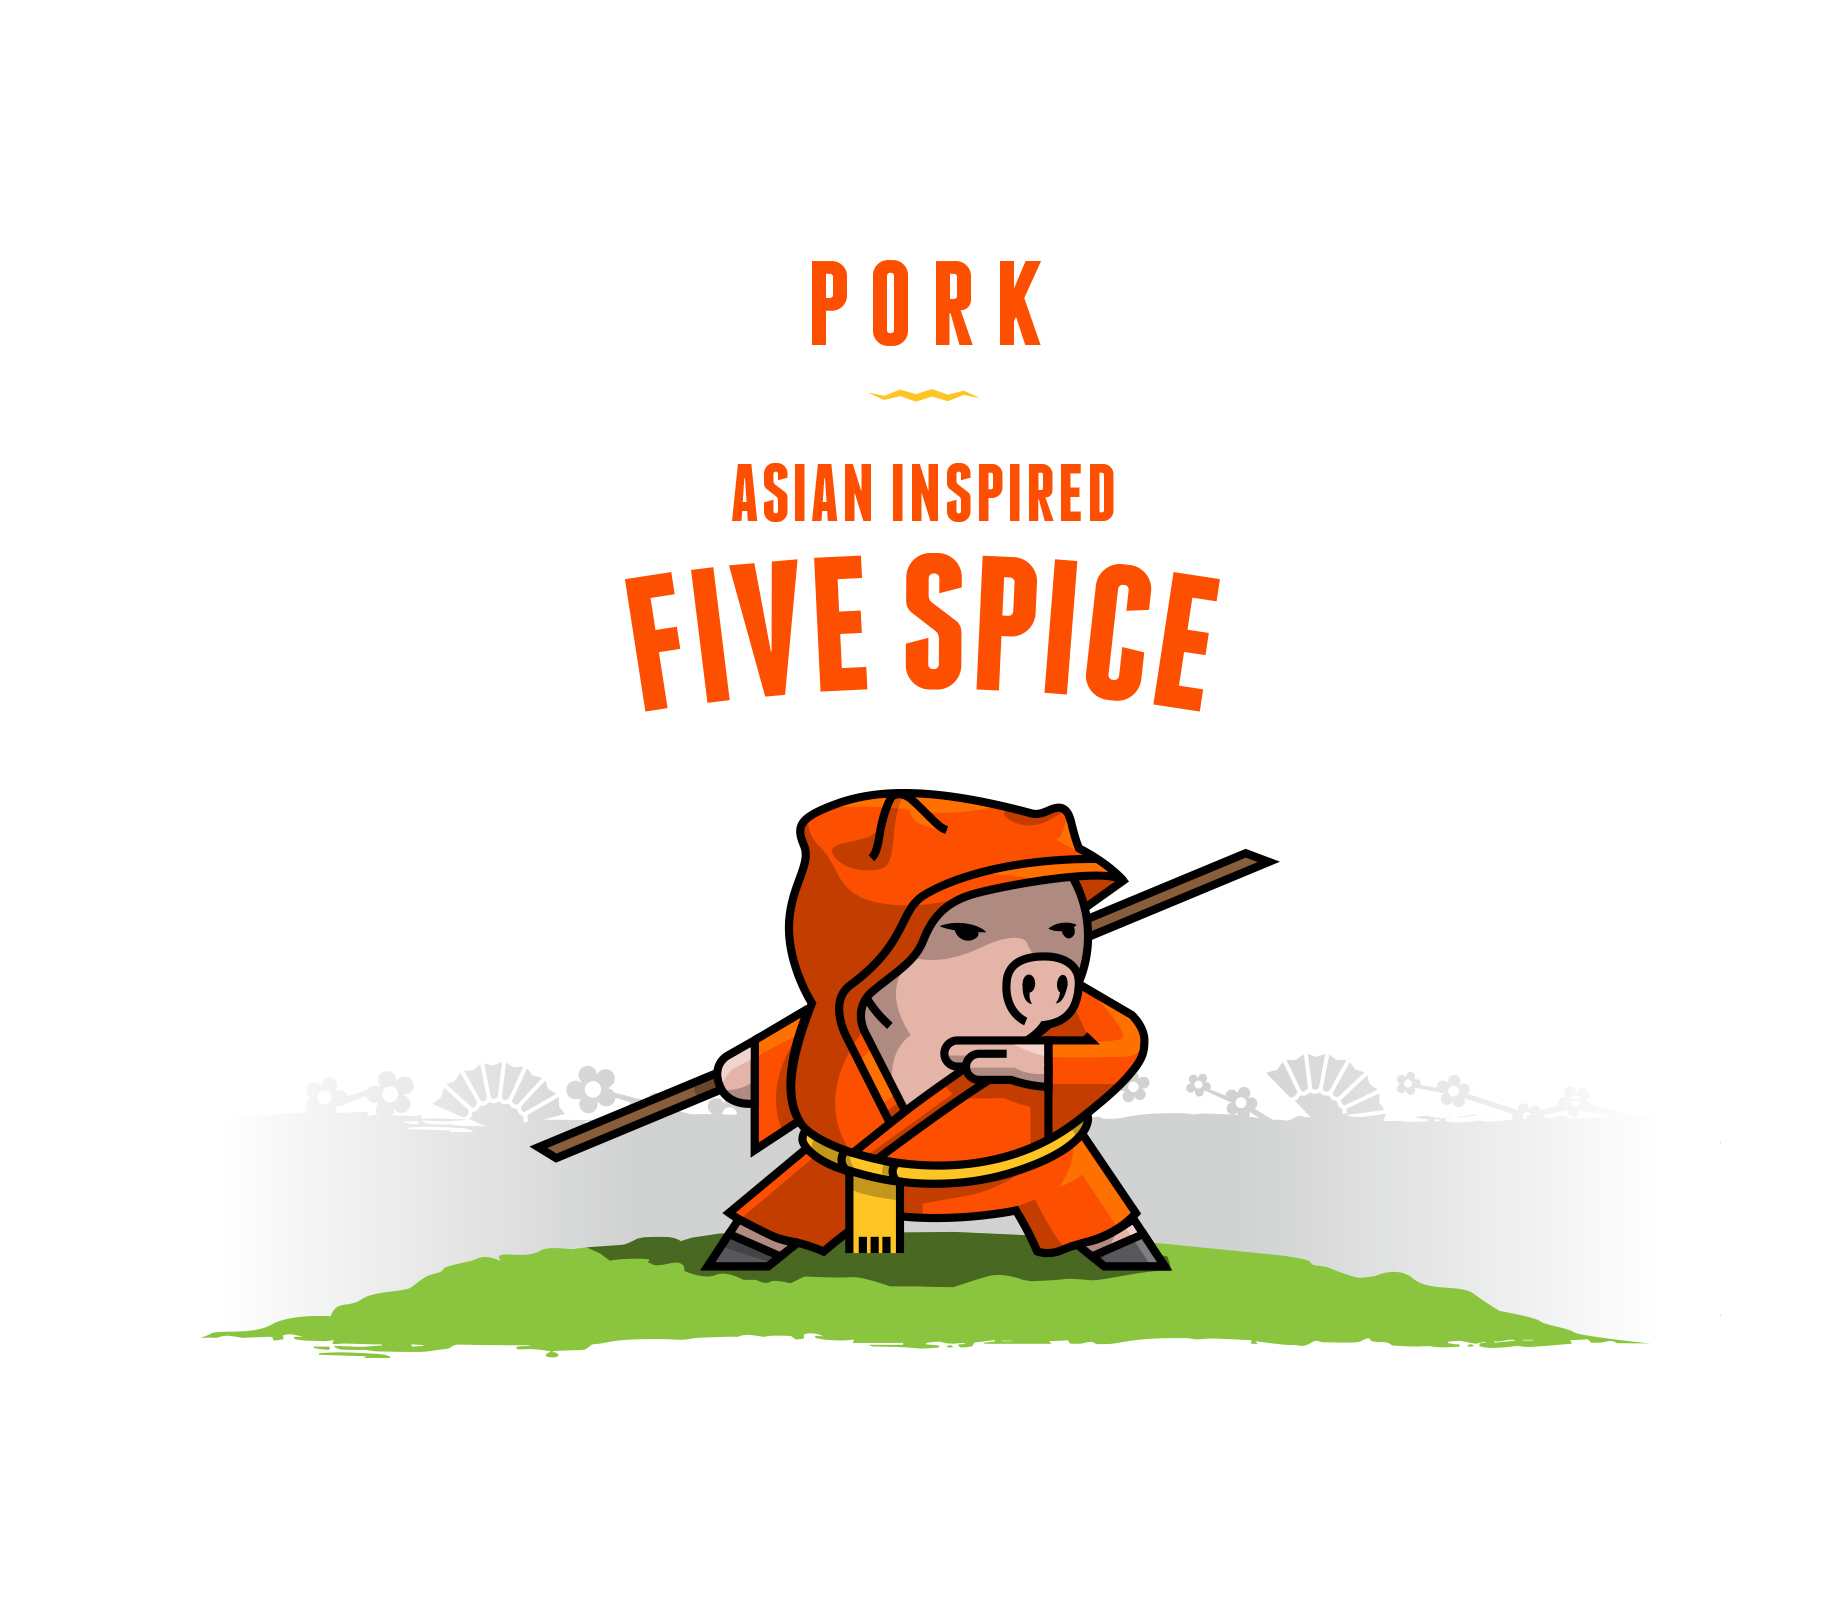 Pork_Asian_Five_Spice_flavor_1.jpg